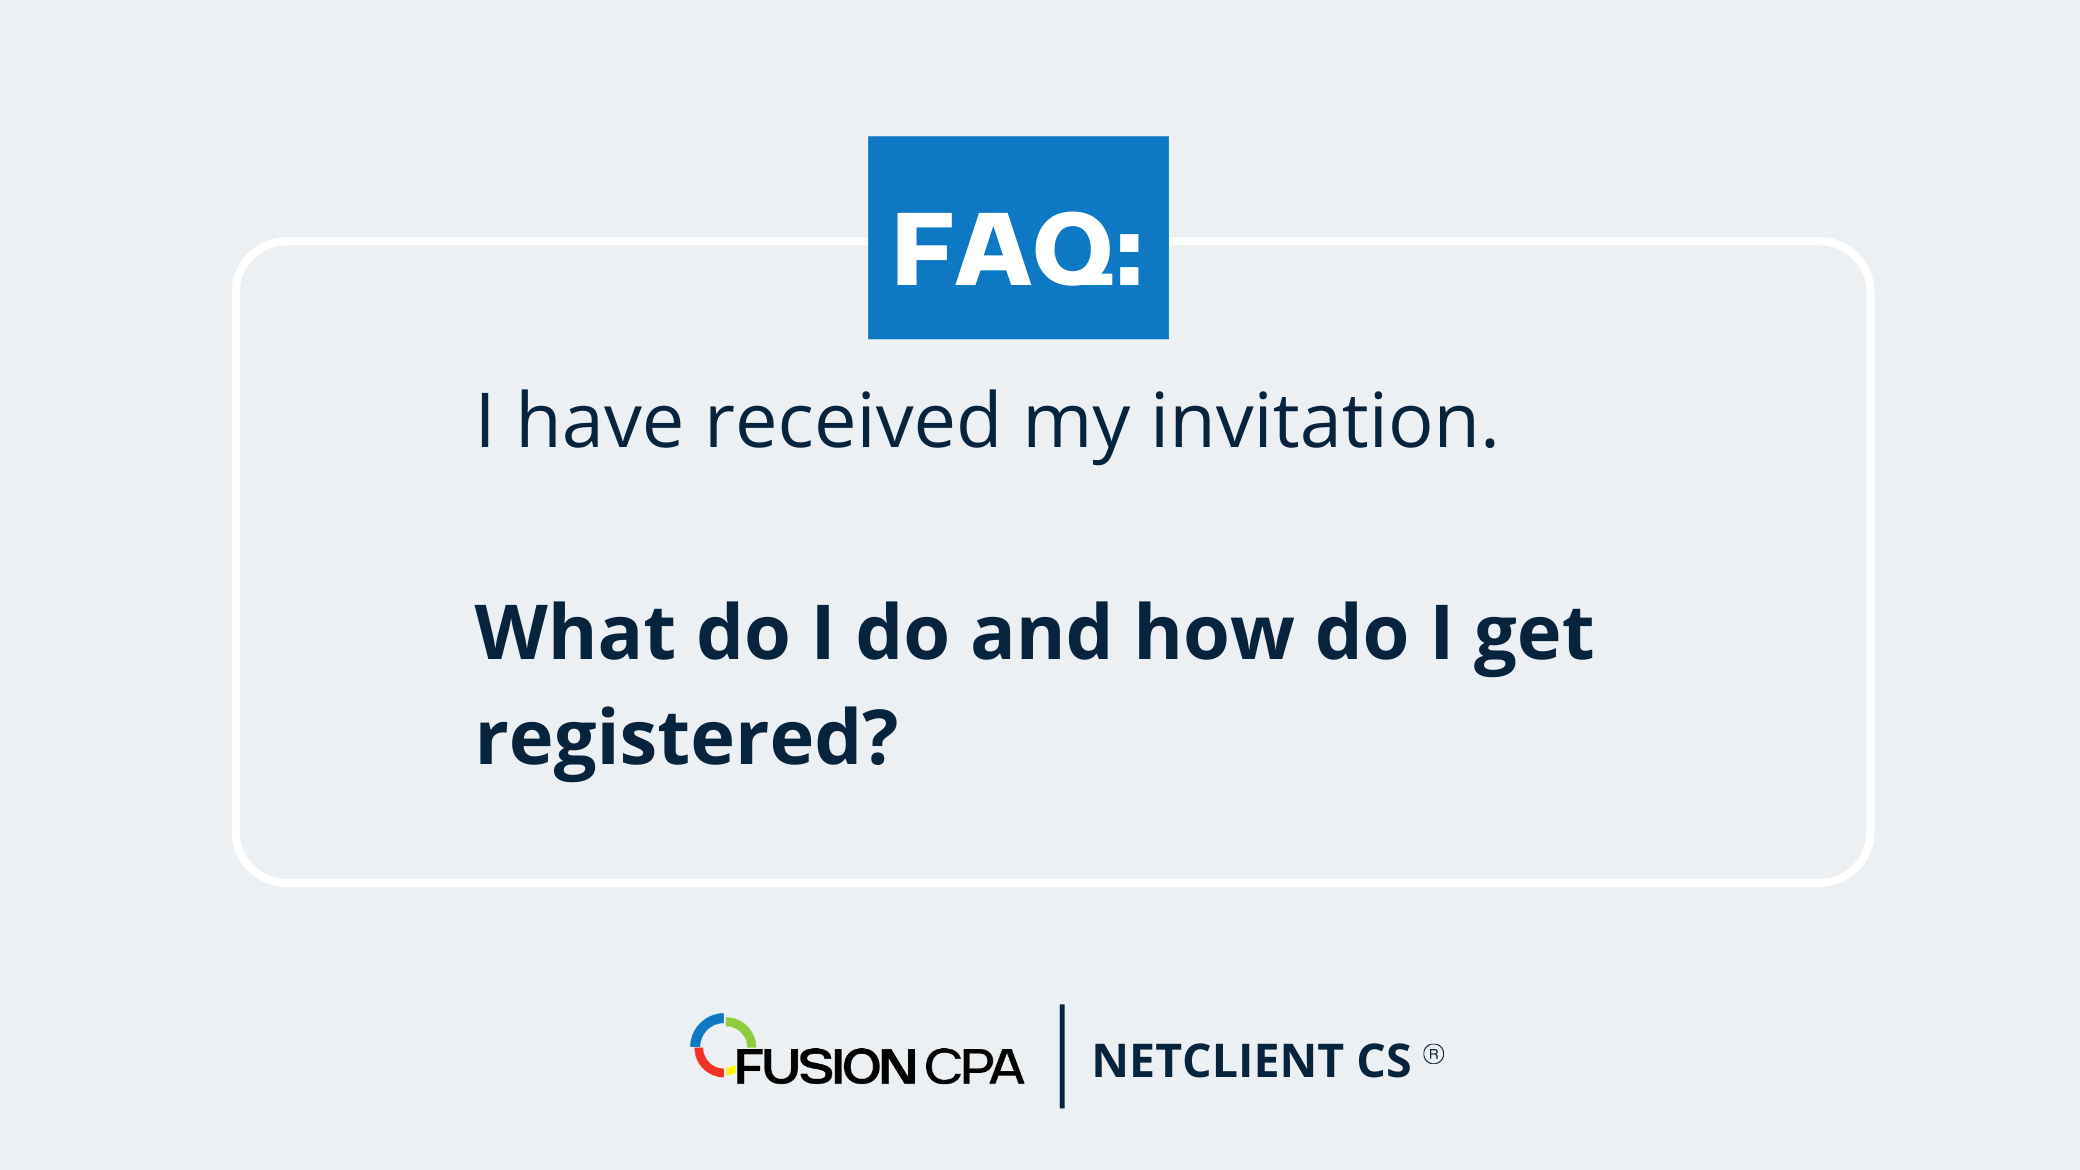 How do I get registered?